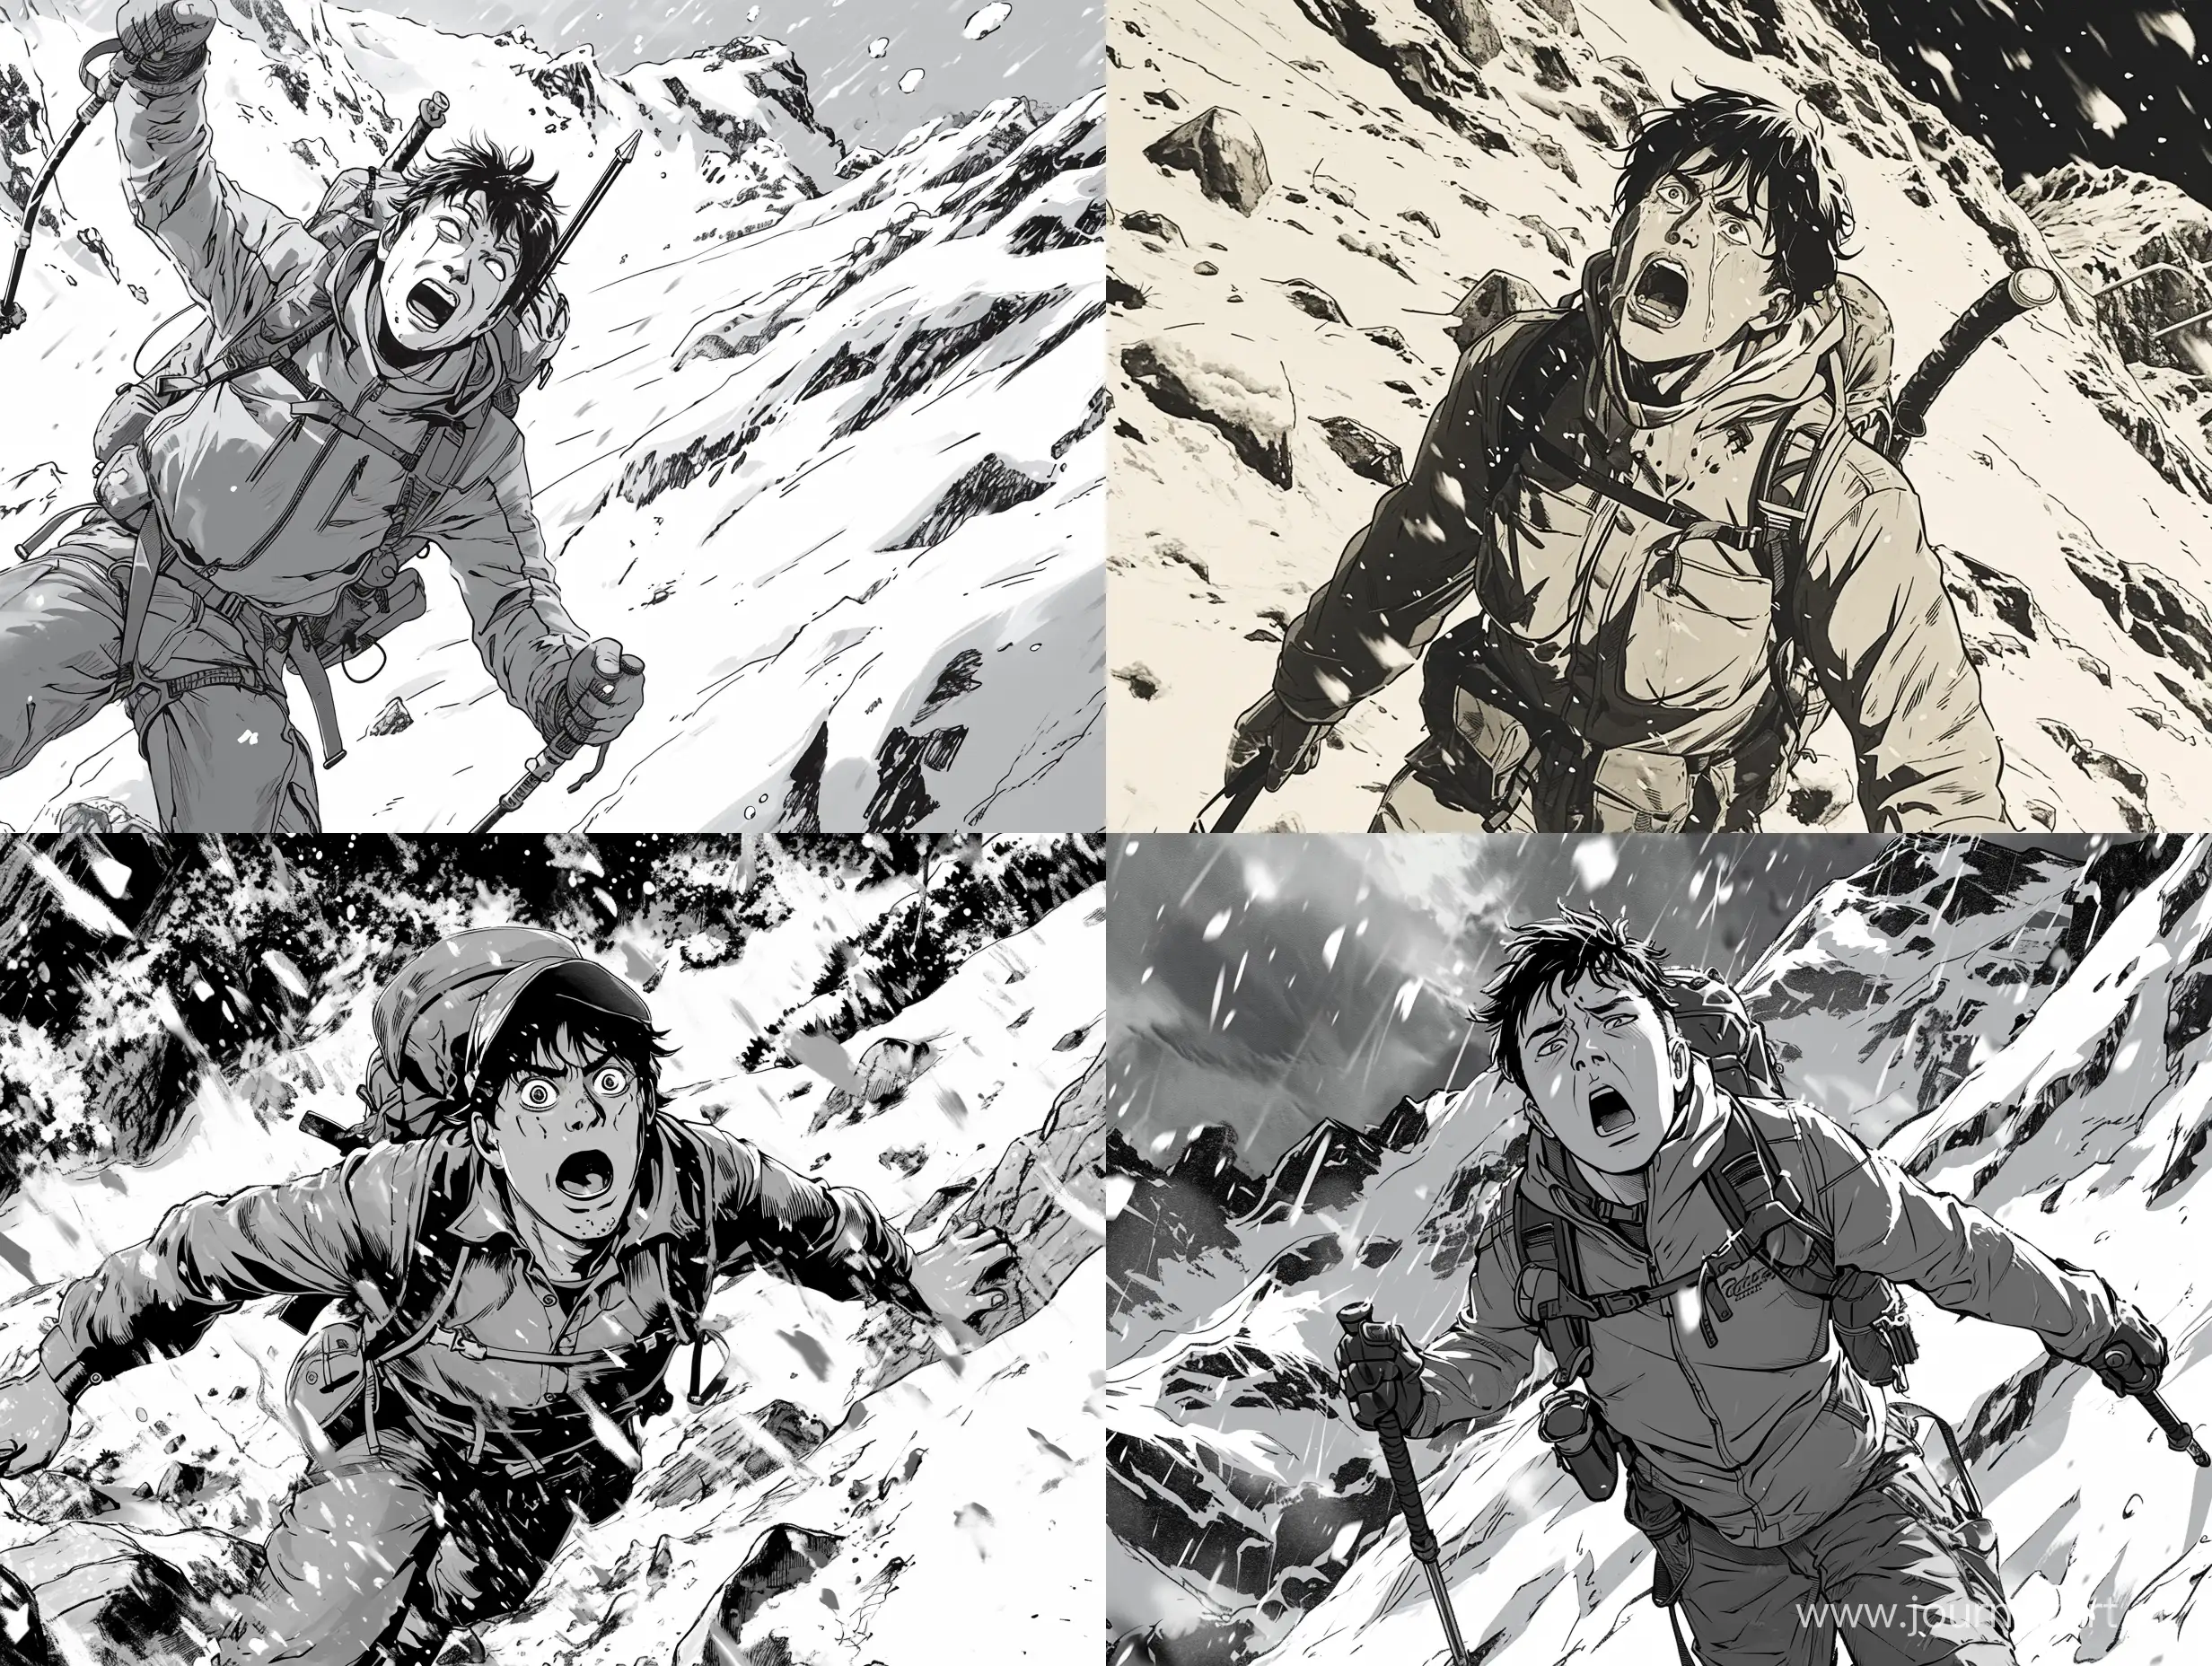 Panicked-Hiker-Seeks-Escape-on-Snowy-Mountain-Ultra-Detailed-Manga-Panel